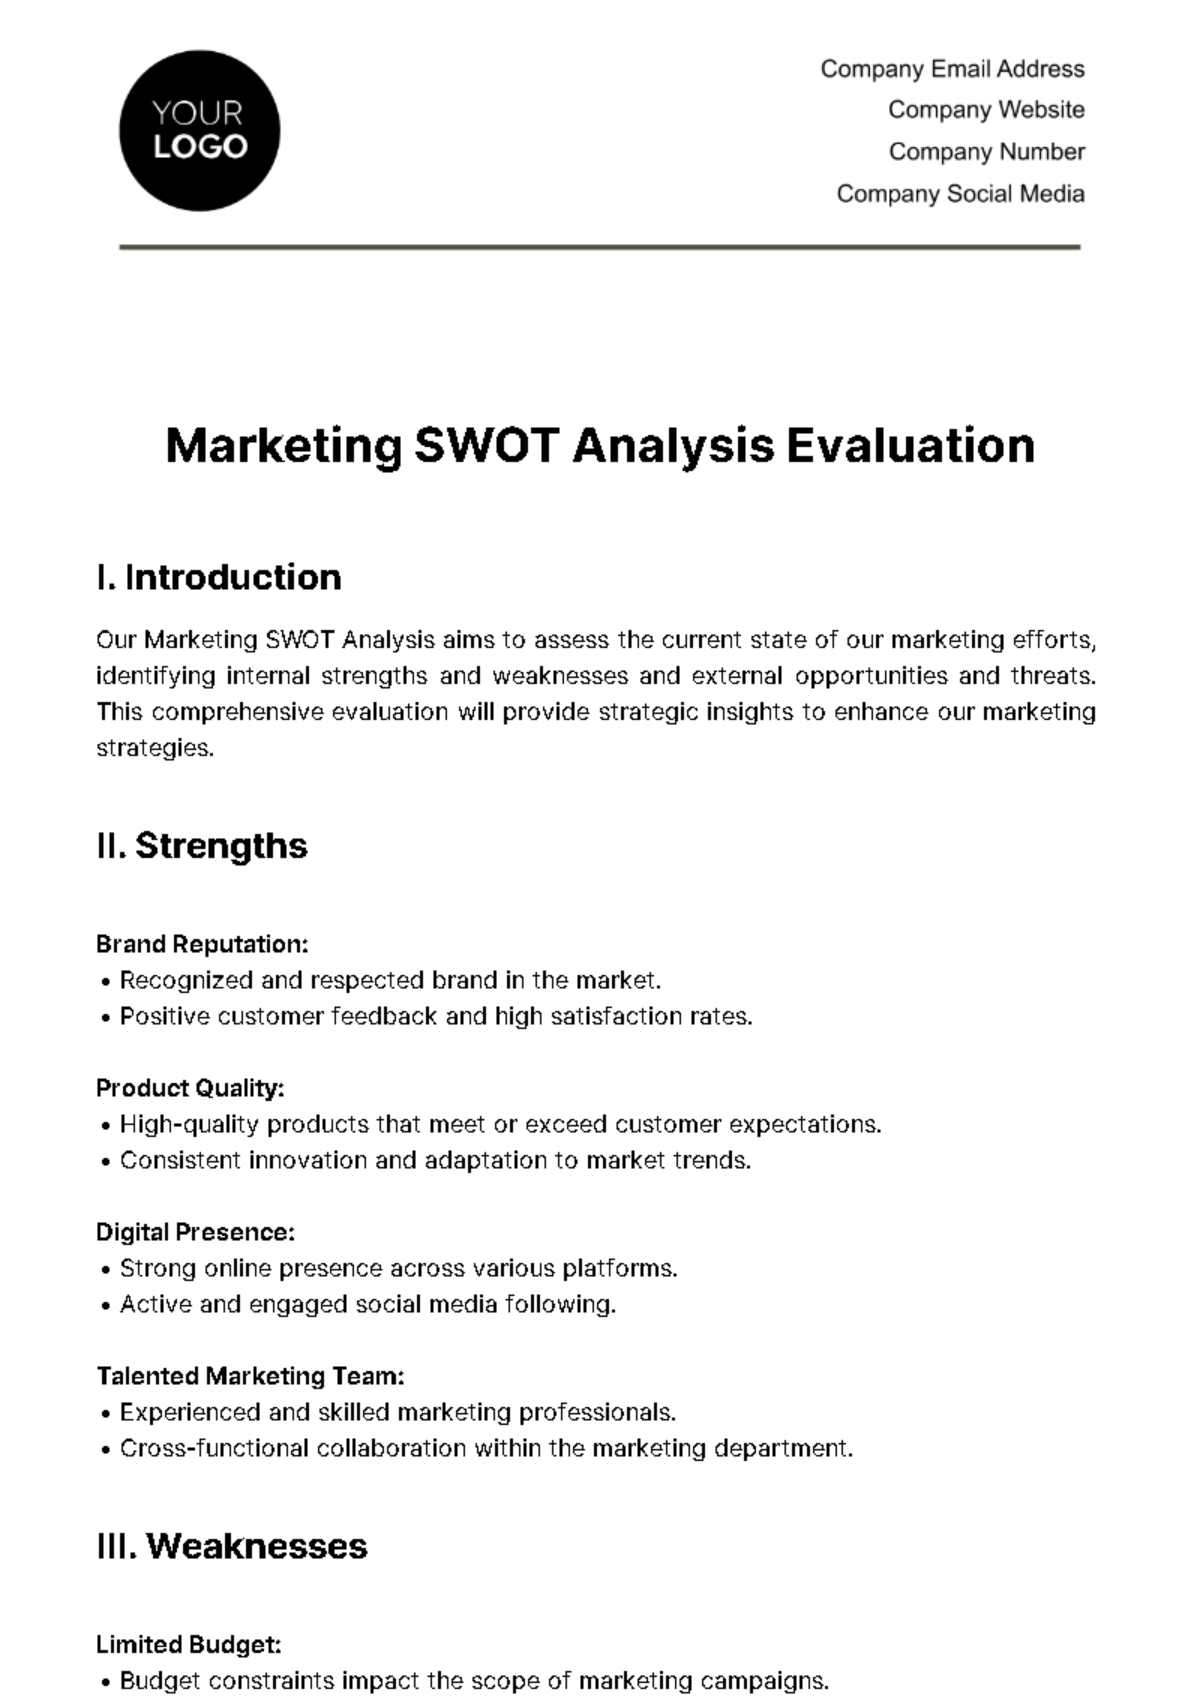 Marketing SWOT Analysis Evaluation Template